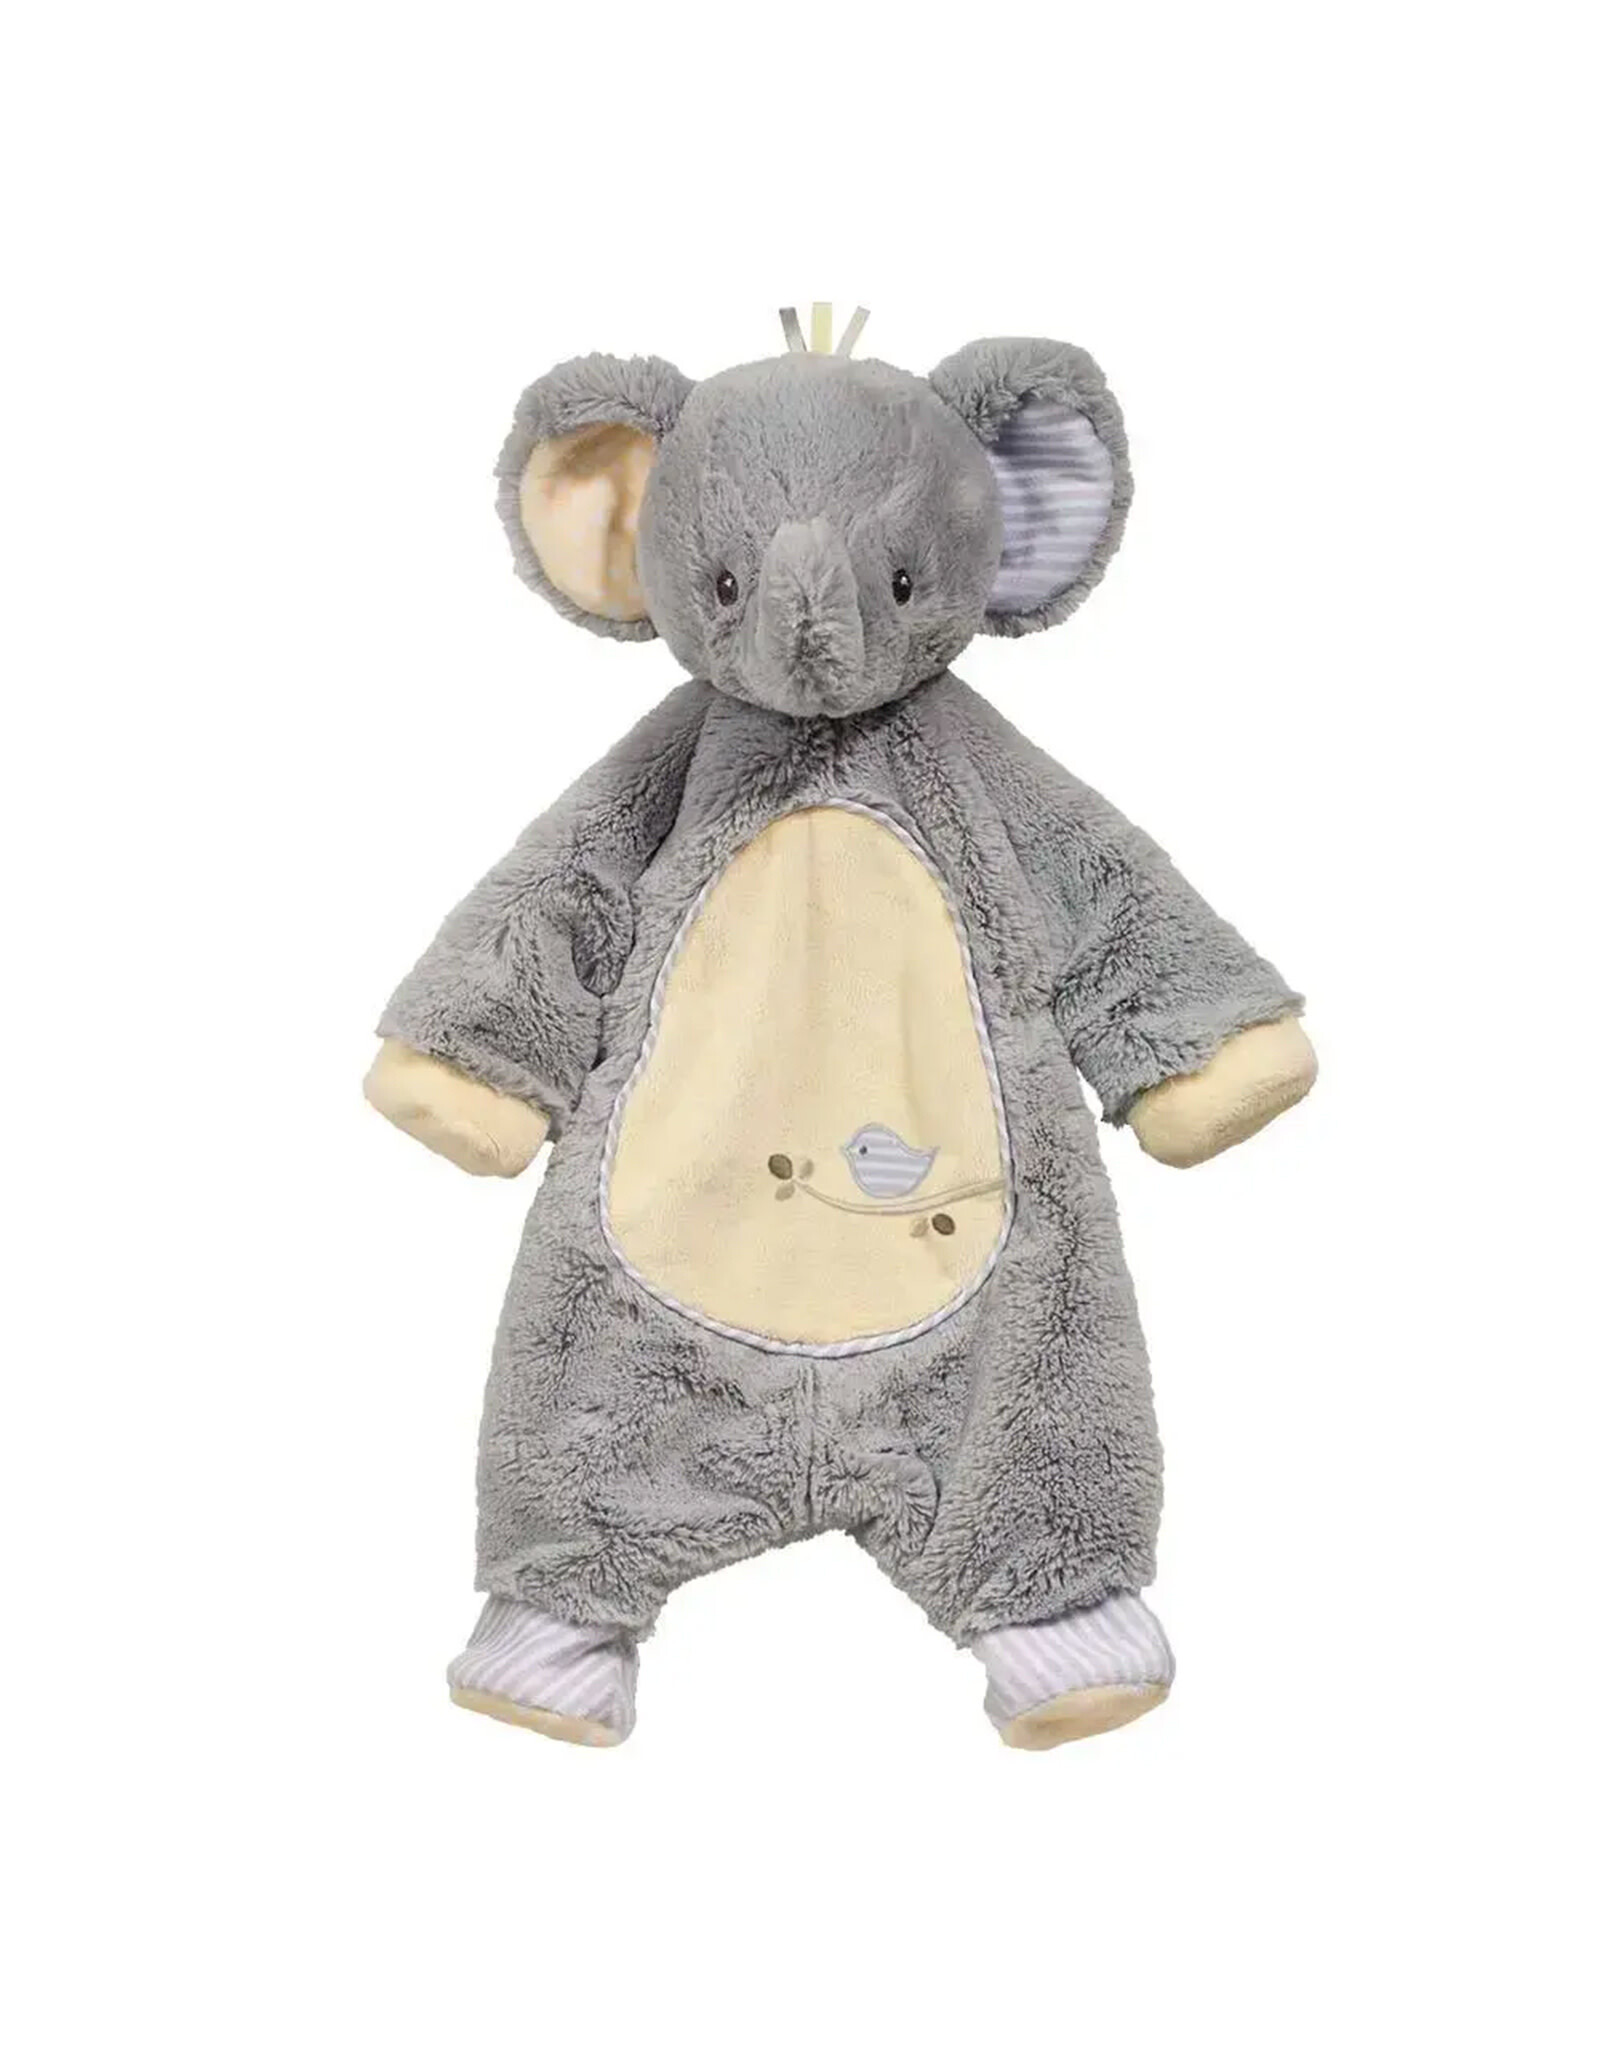 Douglas Douglas Cuddle Toys Baby Joey Grey Elephant Schlumpie